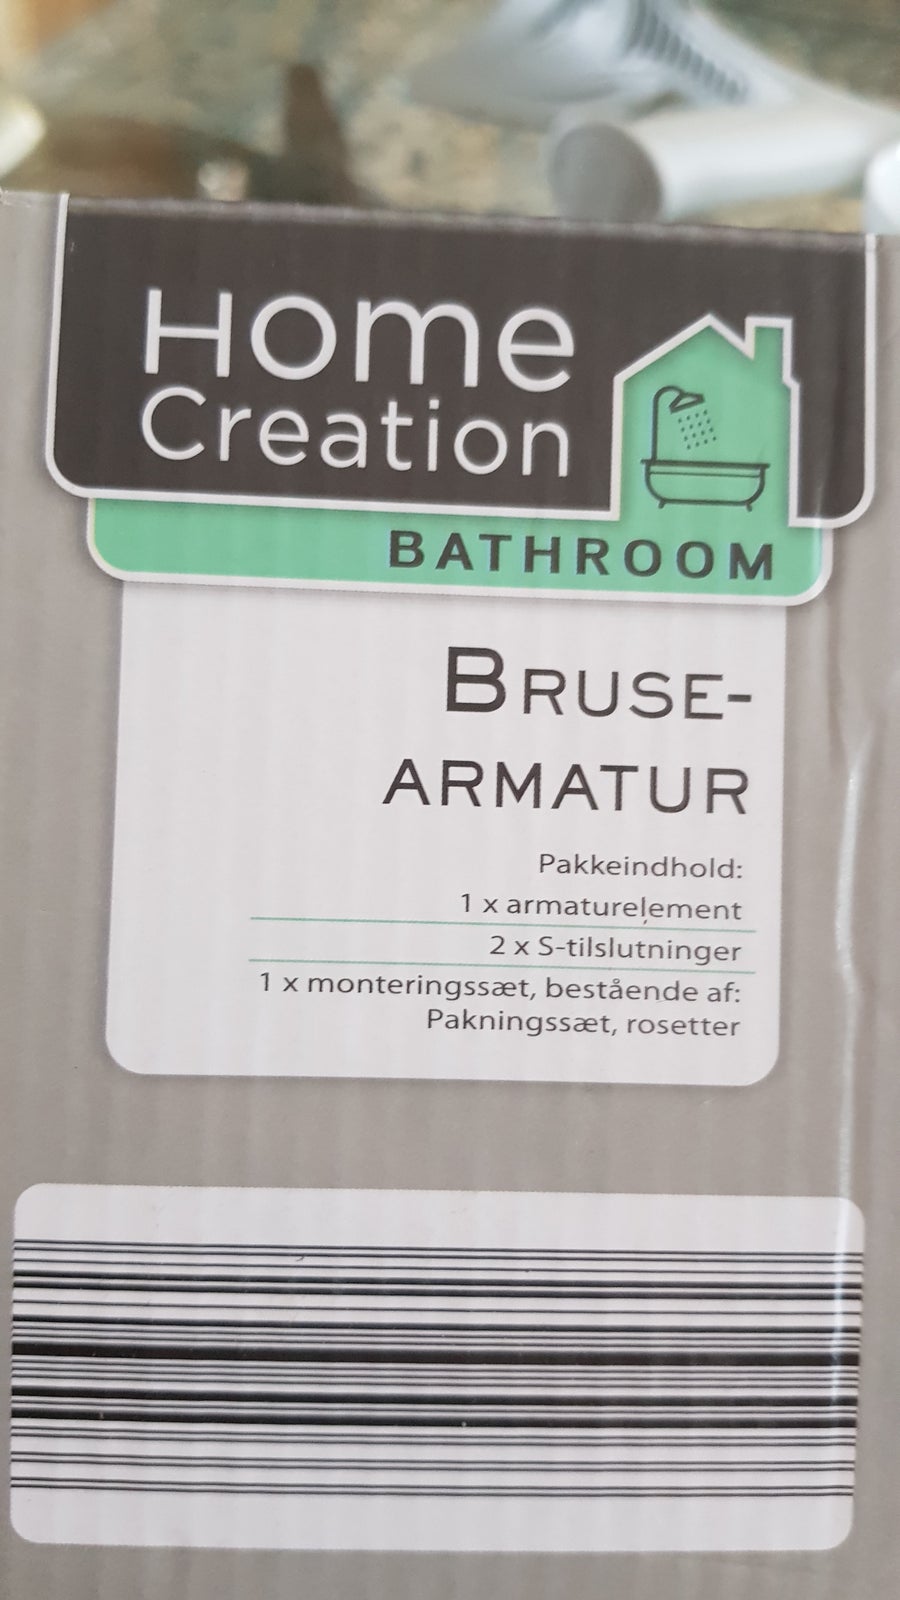 Brusearmatur, Home Creation